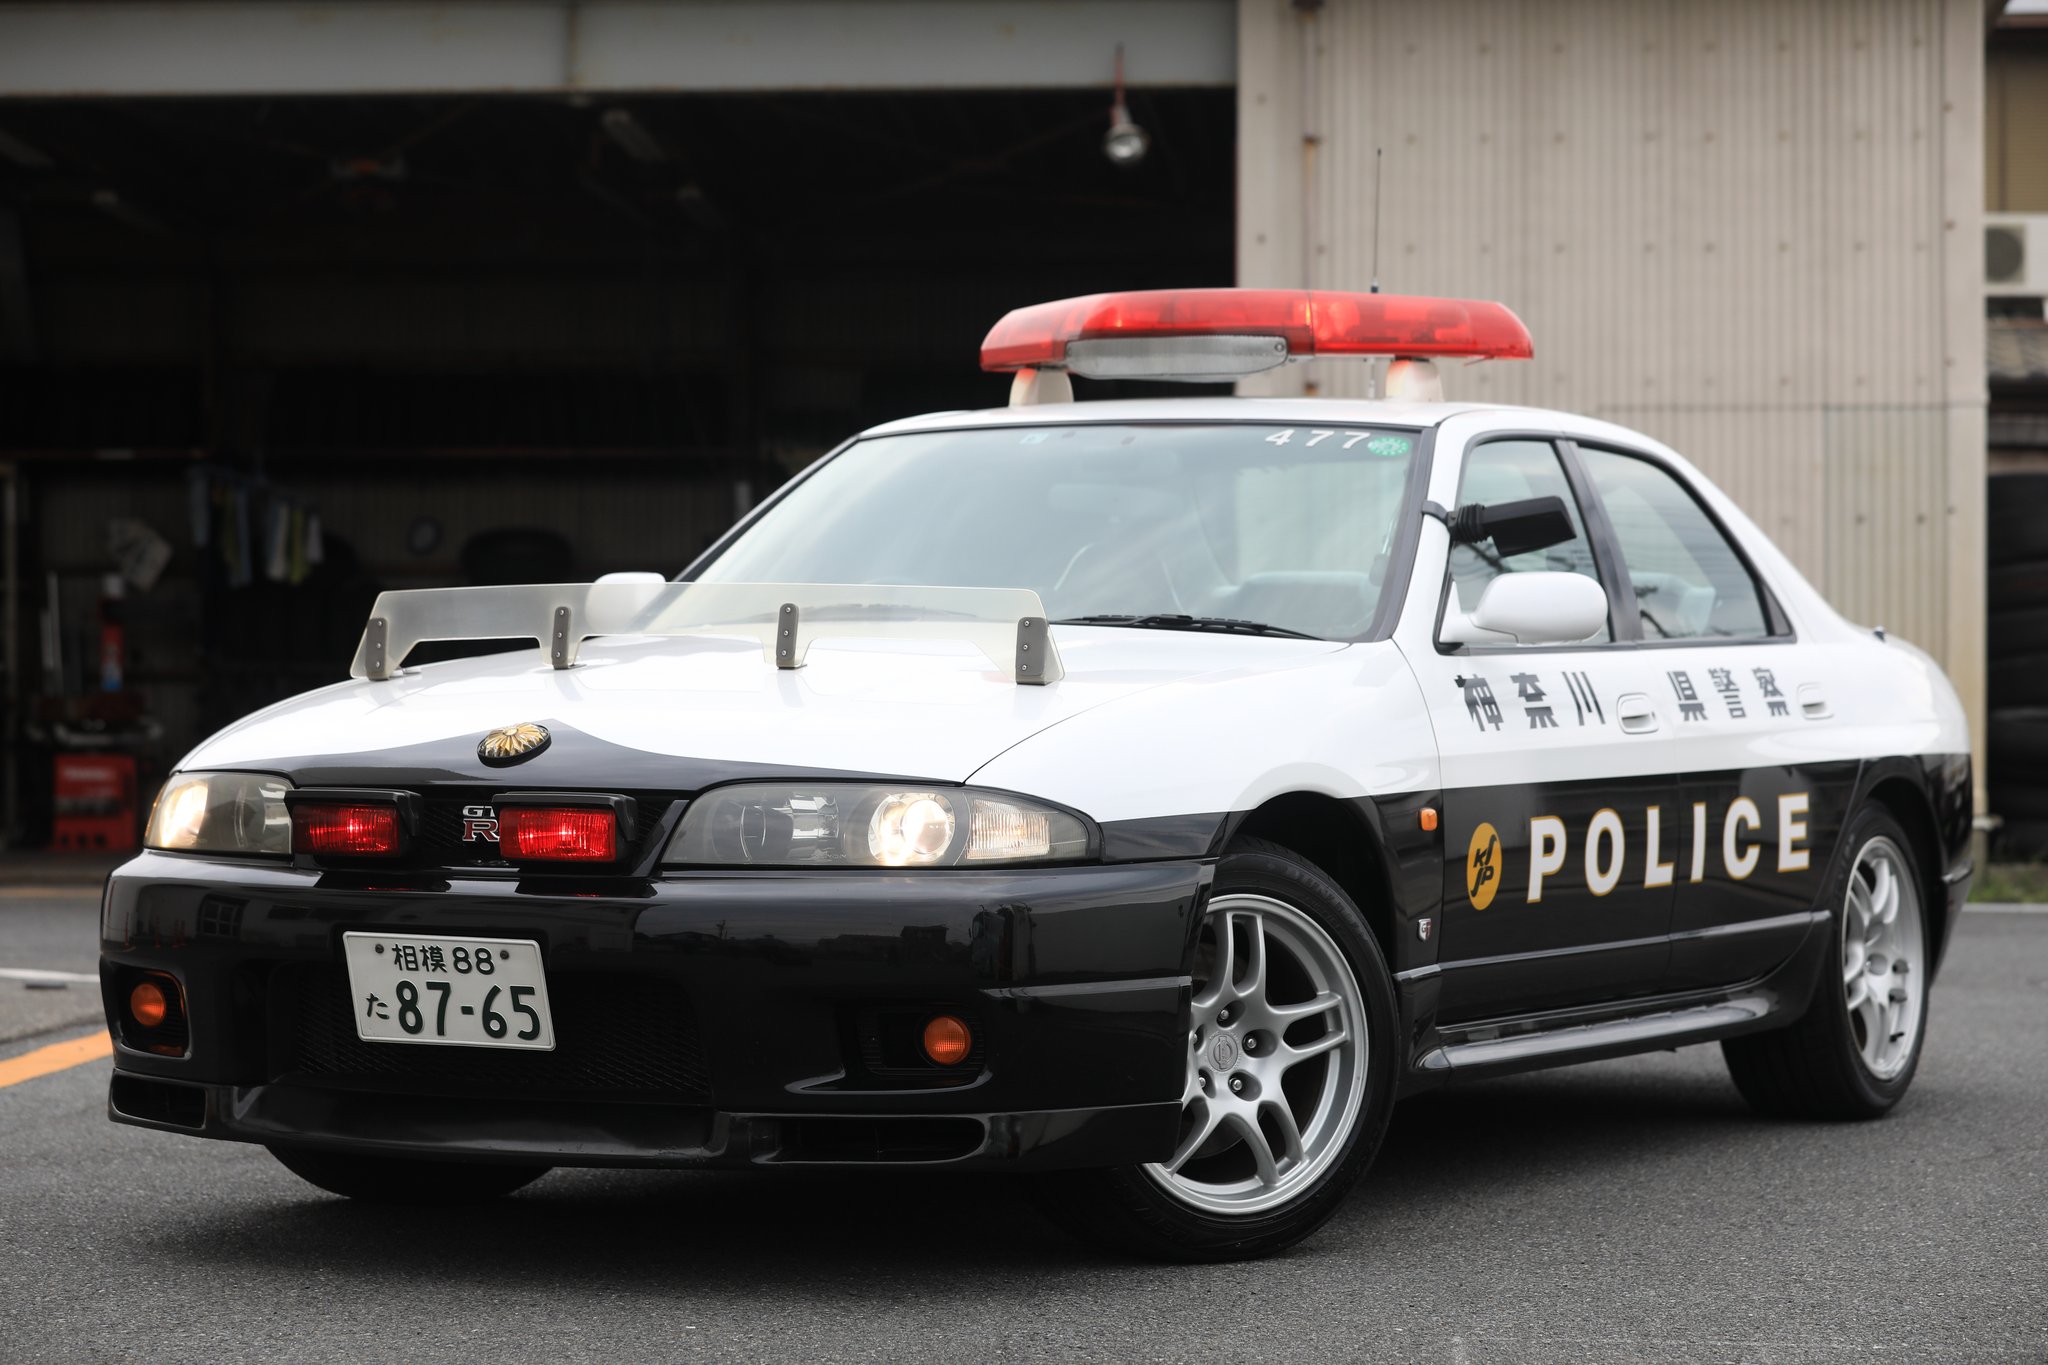 SALE／99%OFF】 特注 スカイライン R33 GT-R パトカー 警視庁 ゲームキャラクター